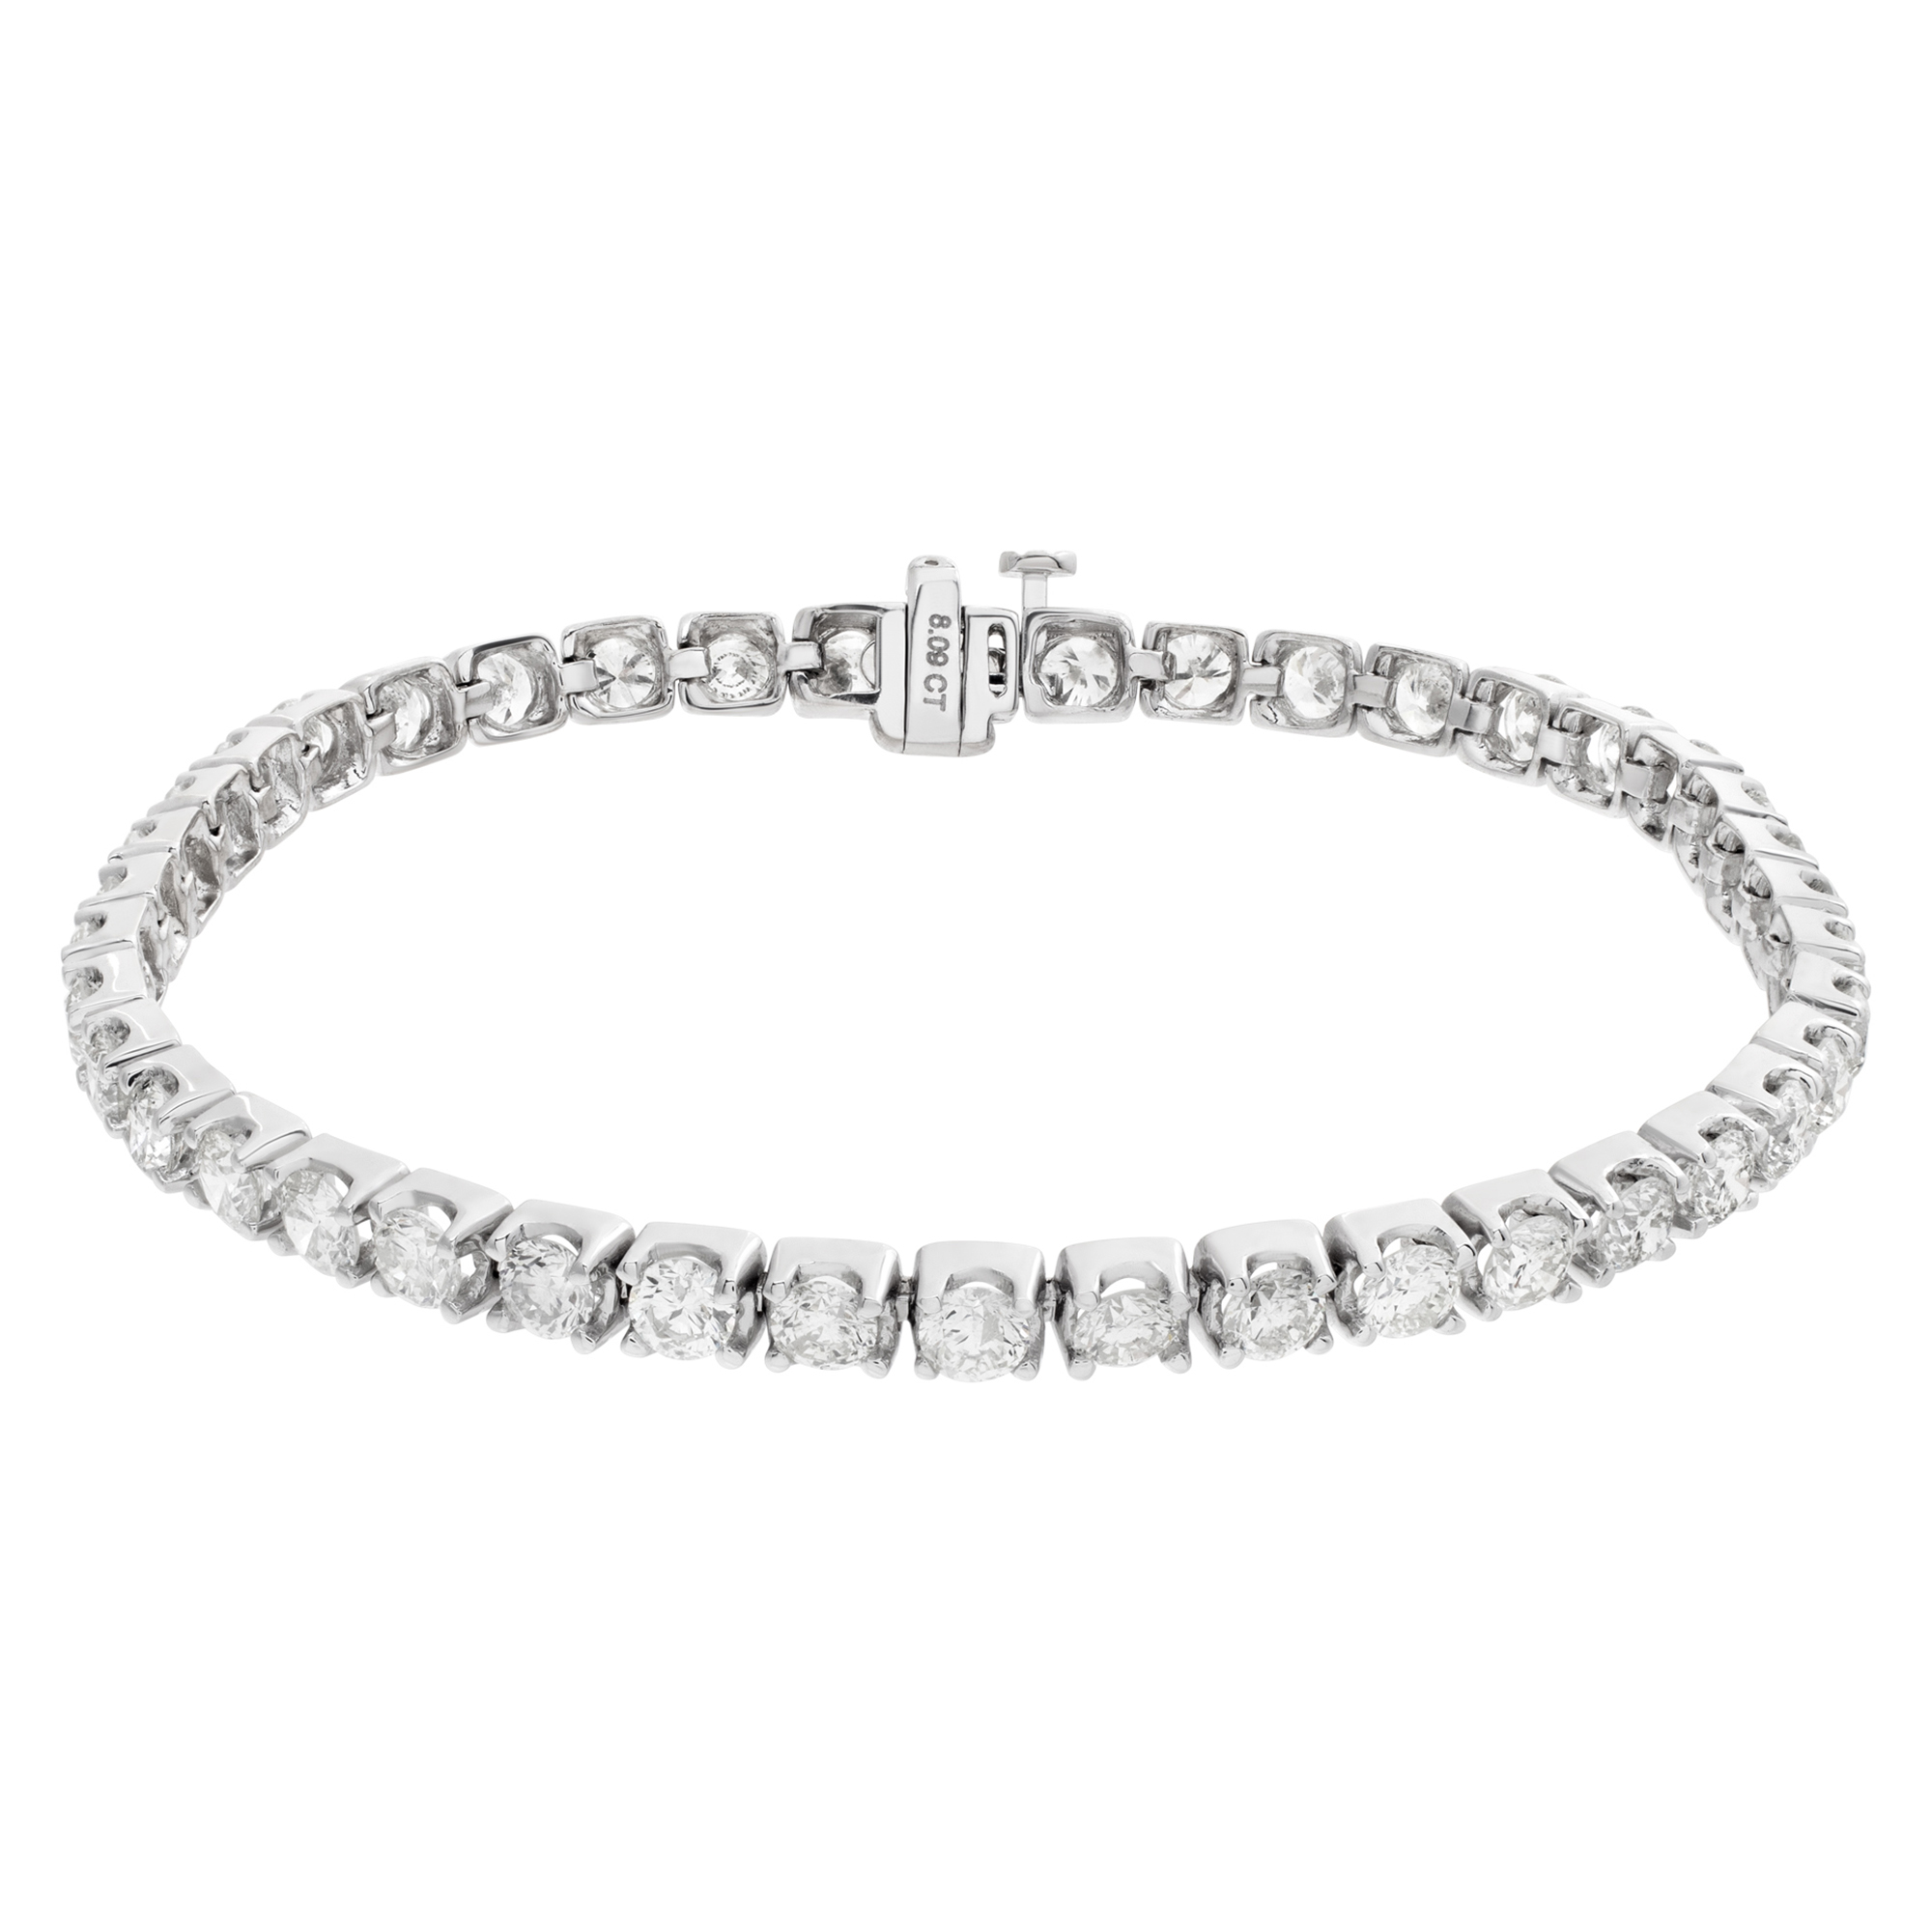 Sparkling line diamond bracelet with 8.09 carat full cut round diamonds set in 14K white gold